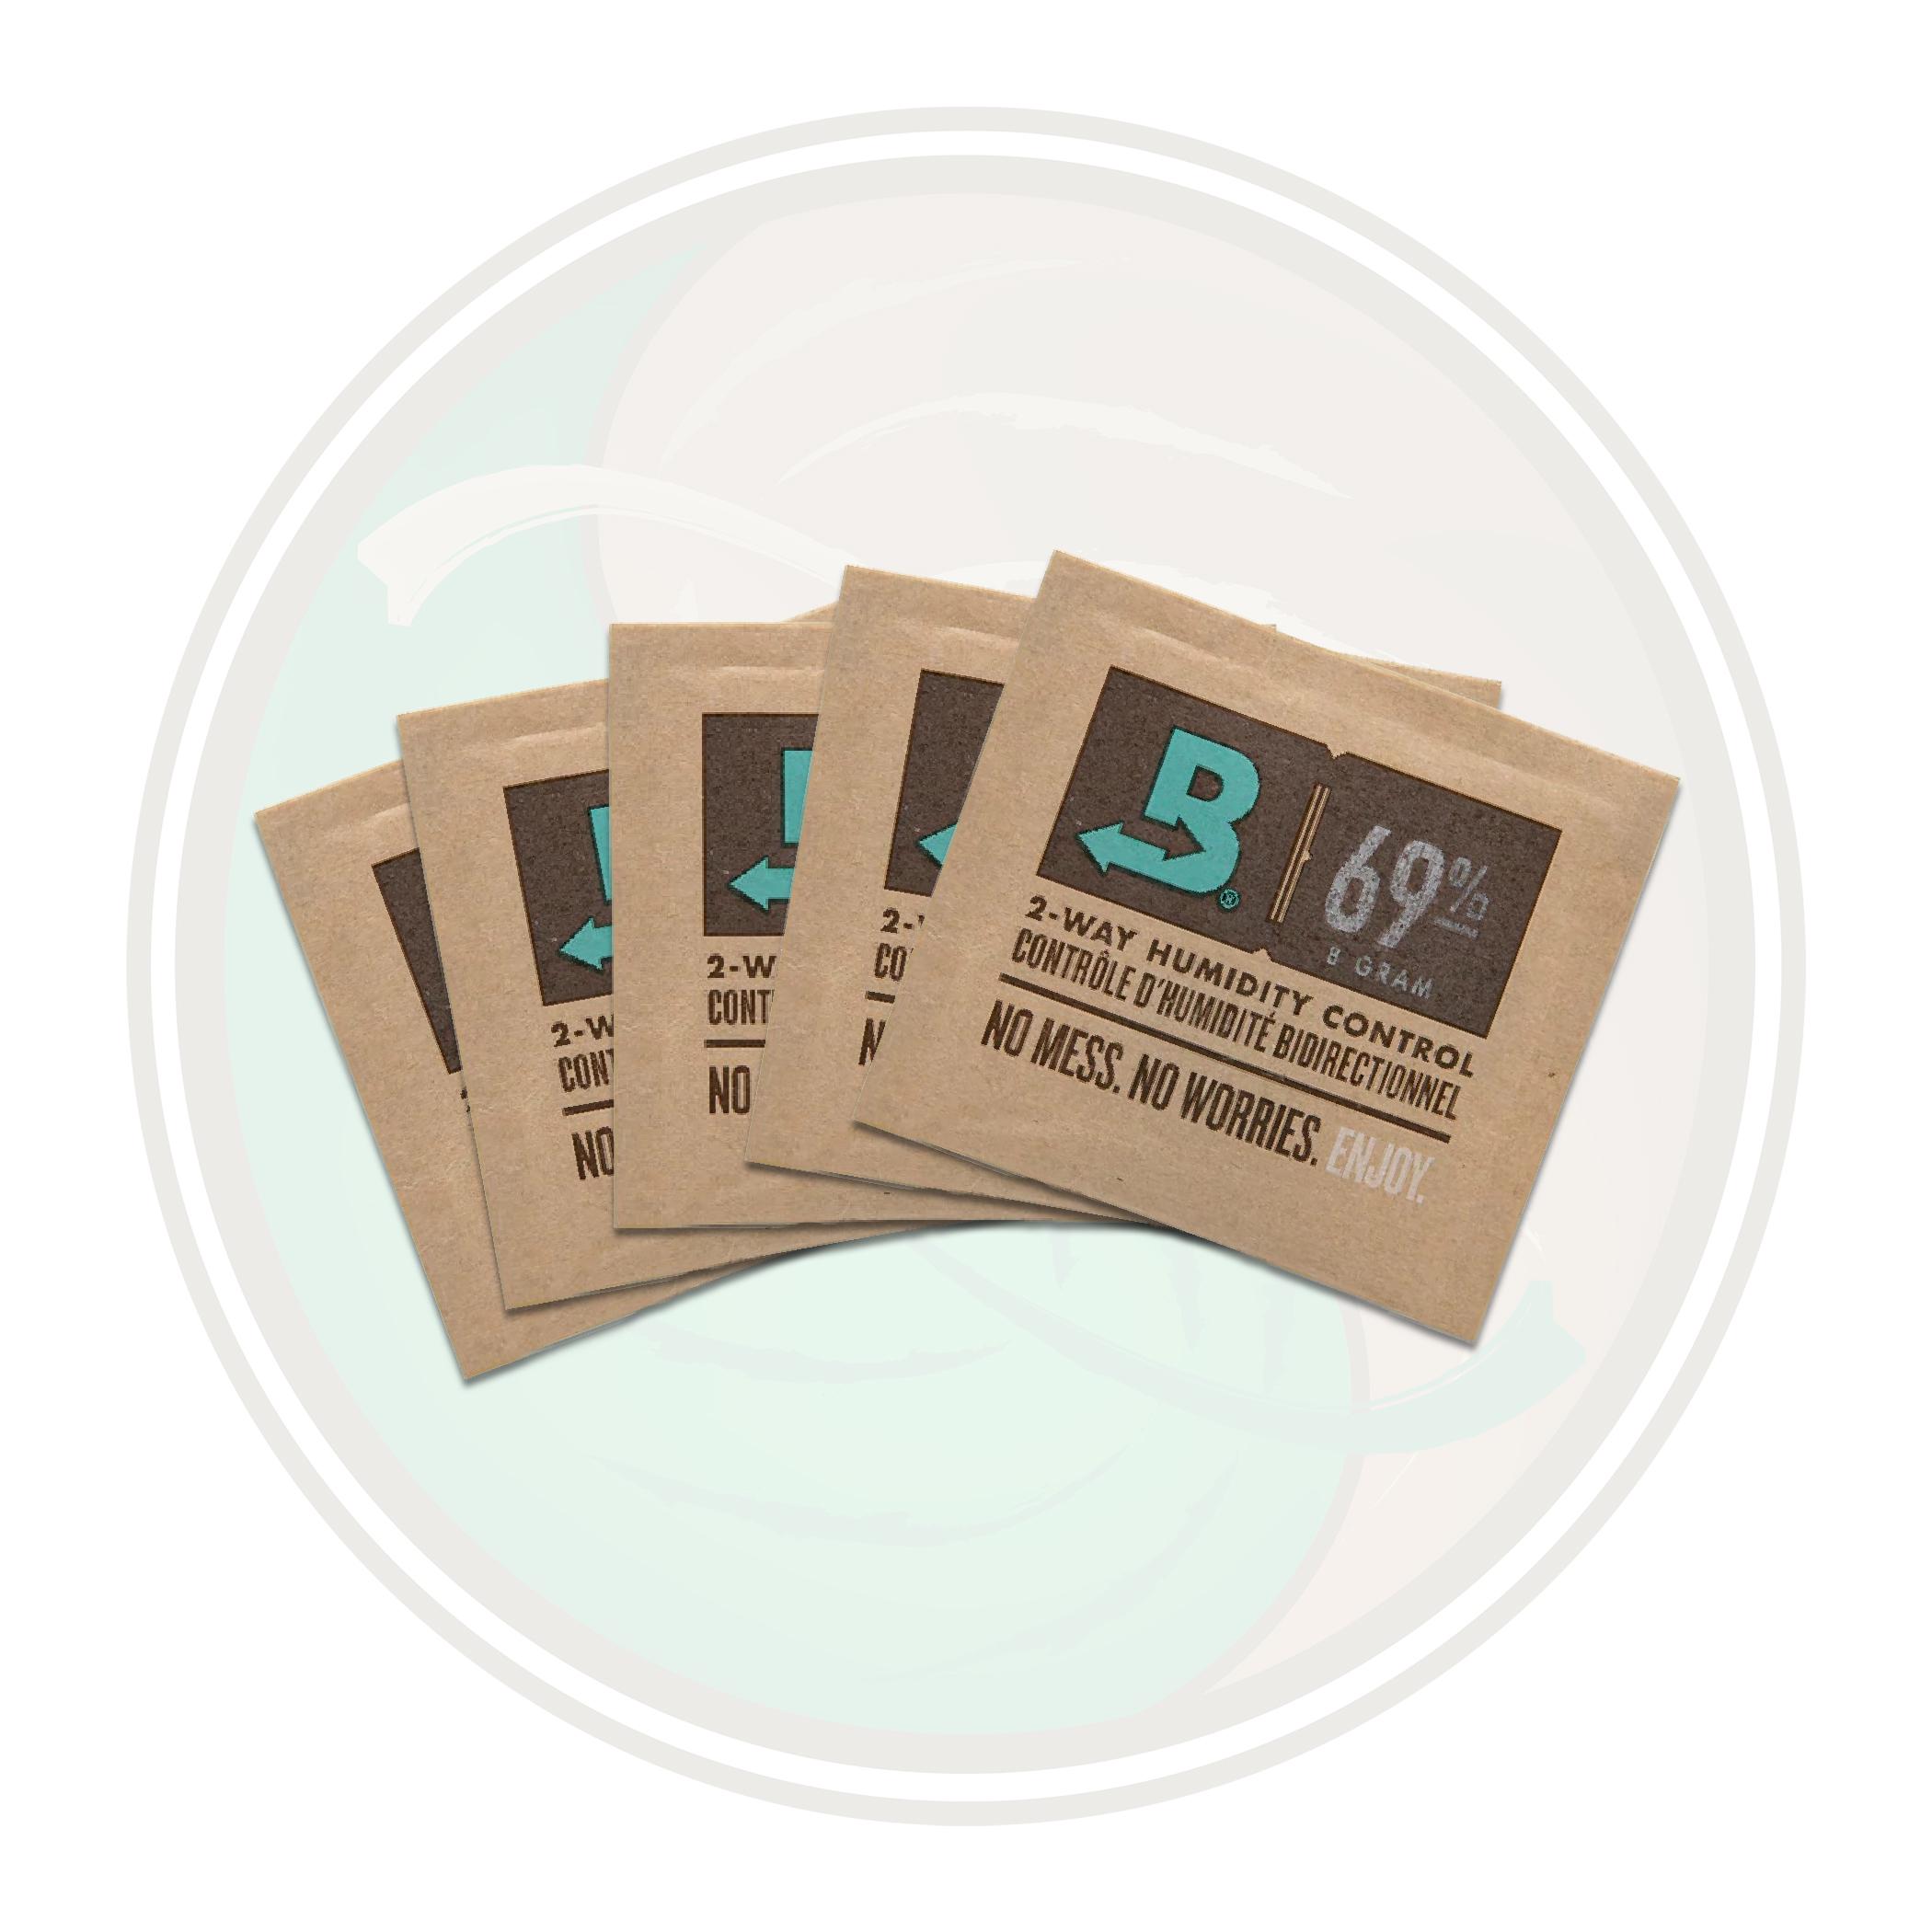 Boveda Humidipak Humidification Pack 8 gram 69% RH - Package of 5 units